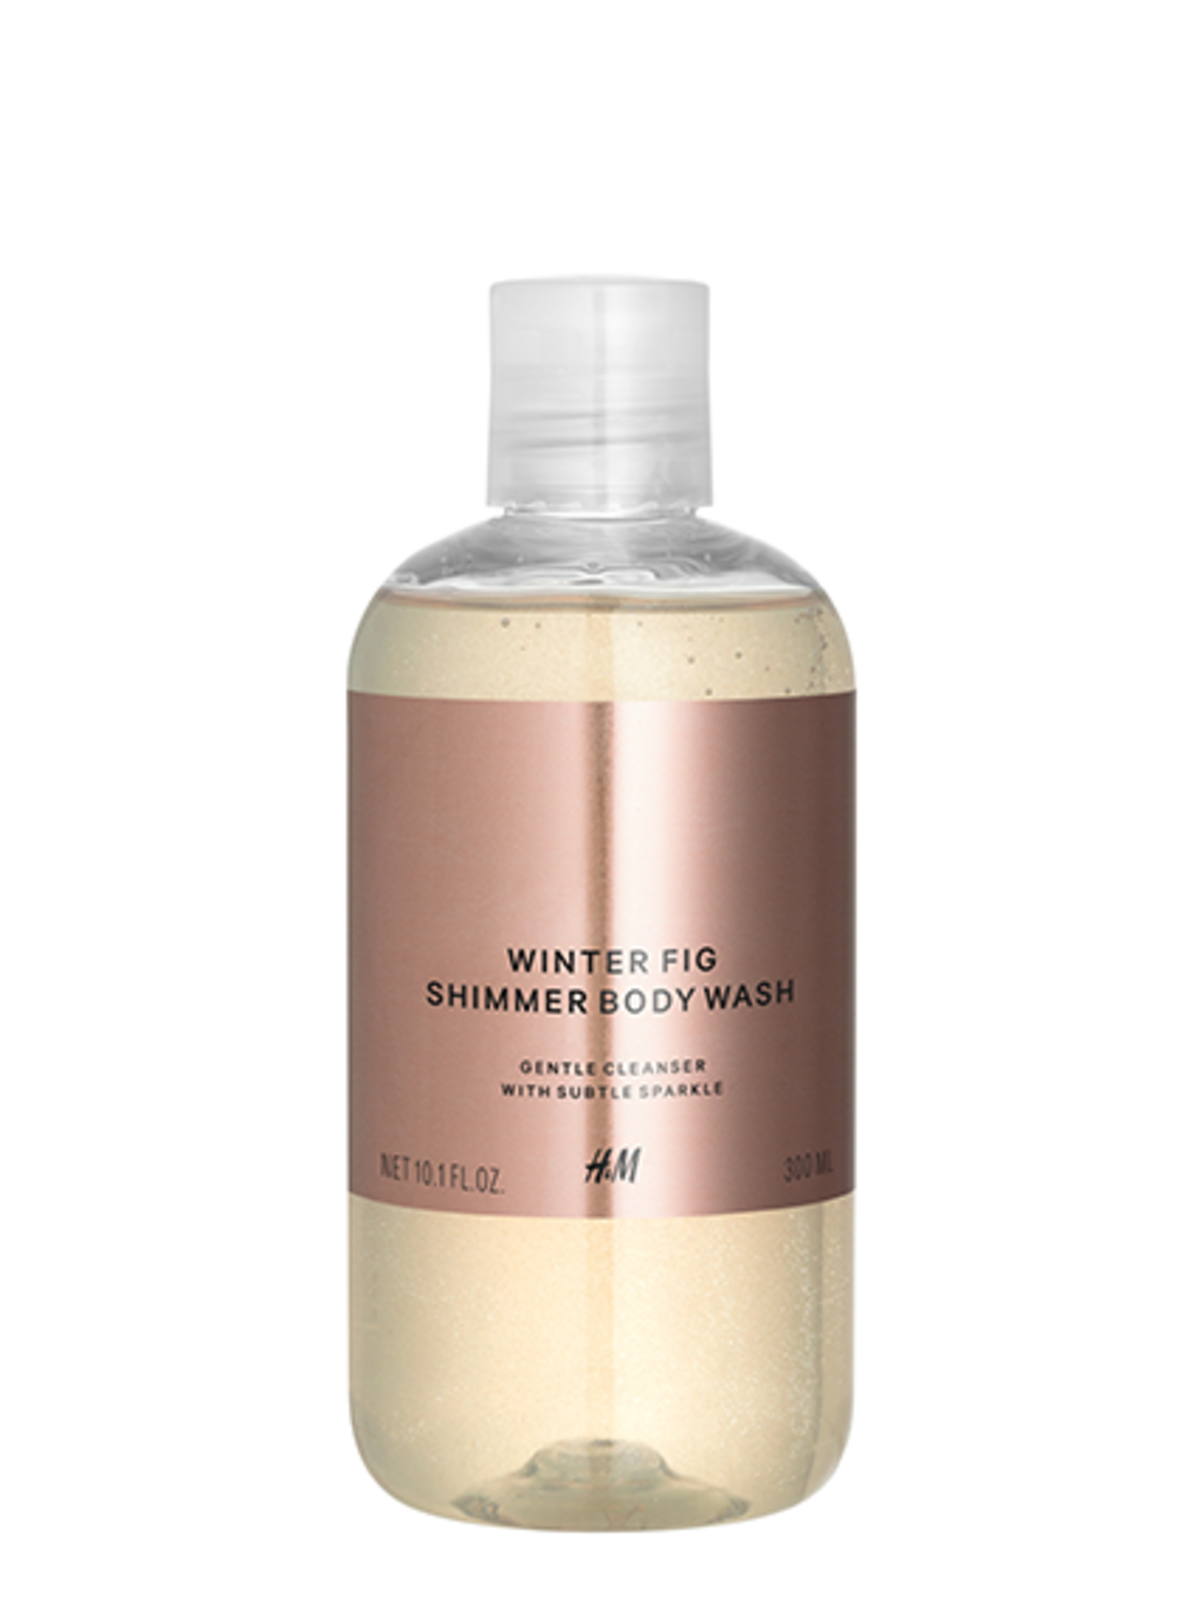 H&M Shimmer Body Wash o zapachu Winter Fig